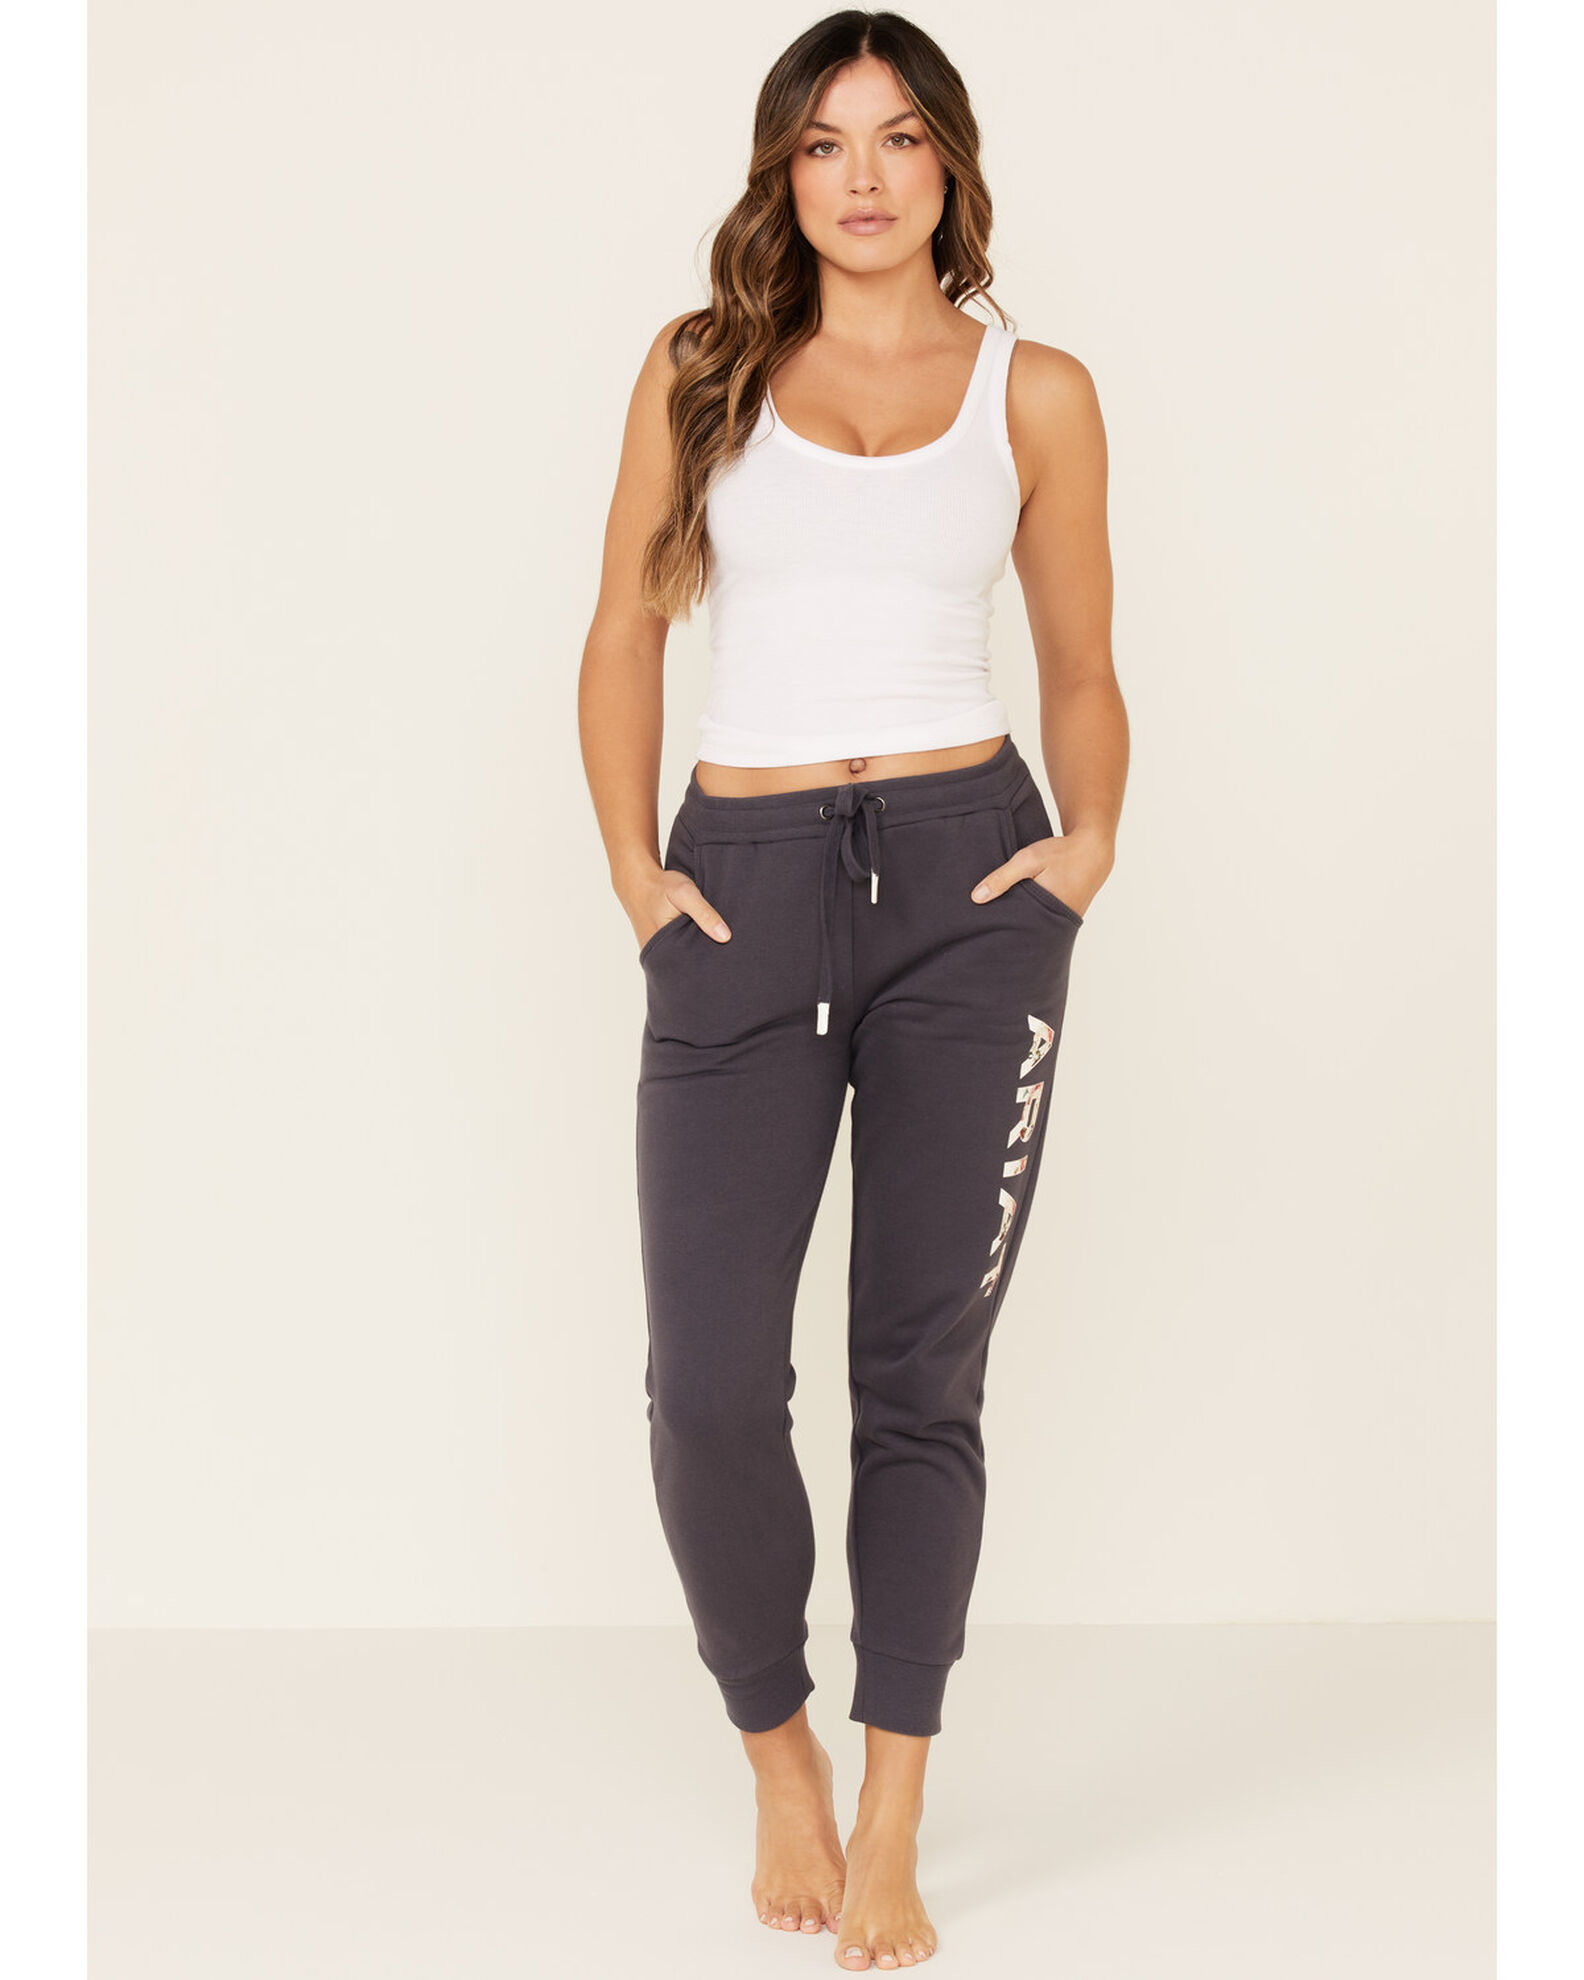 Product Name: Ariat Women's Grey Logo Jogger Sweatpants